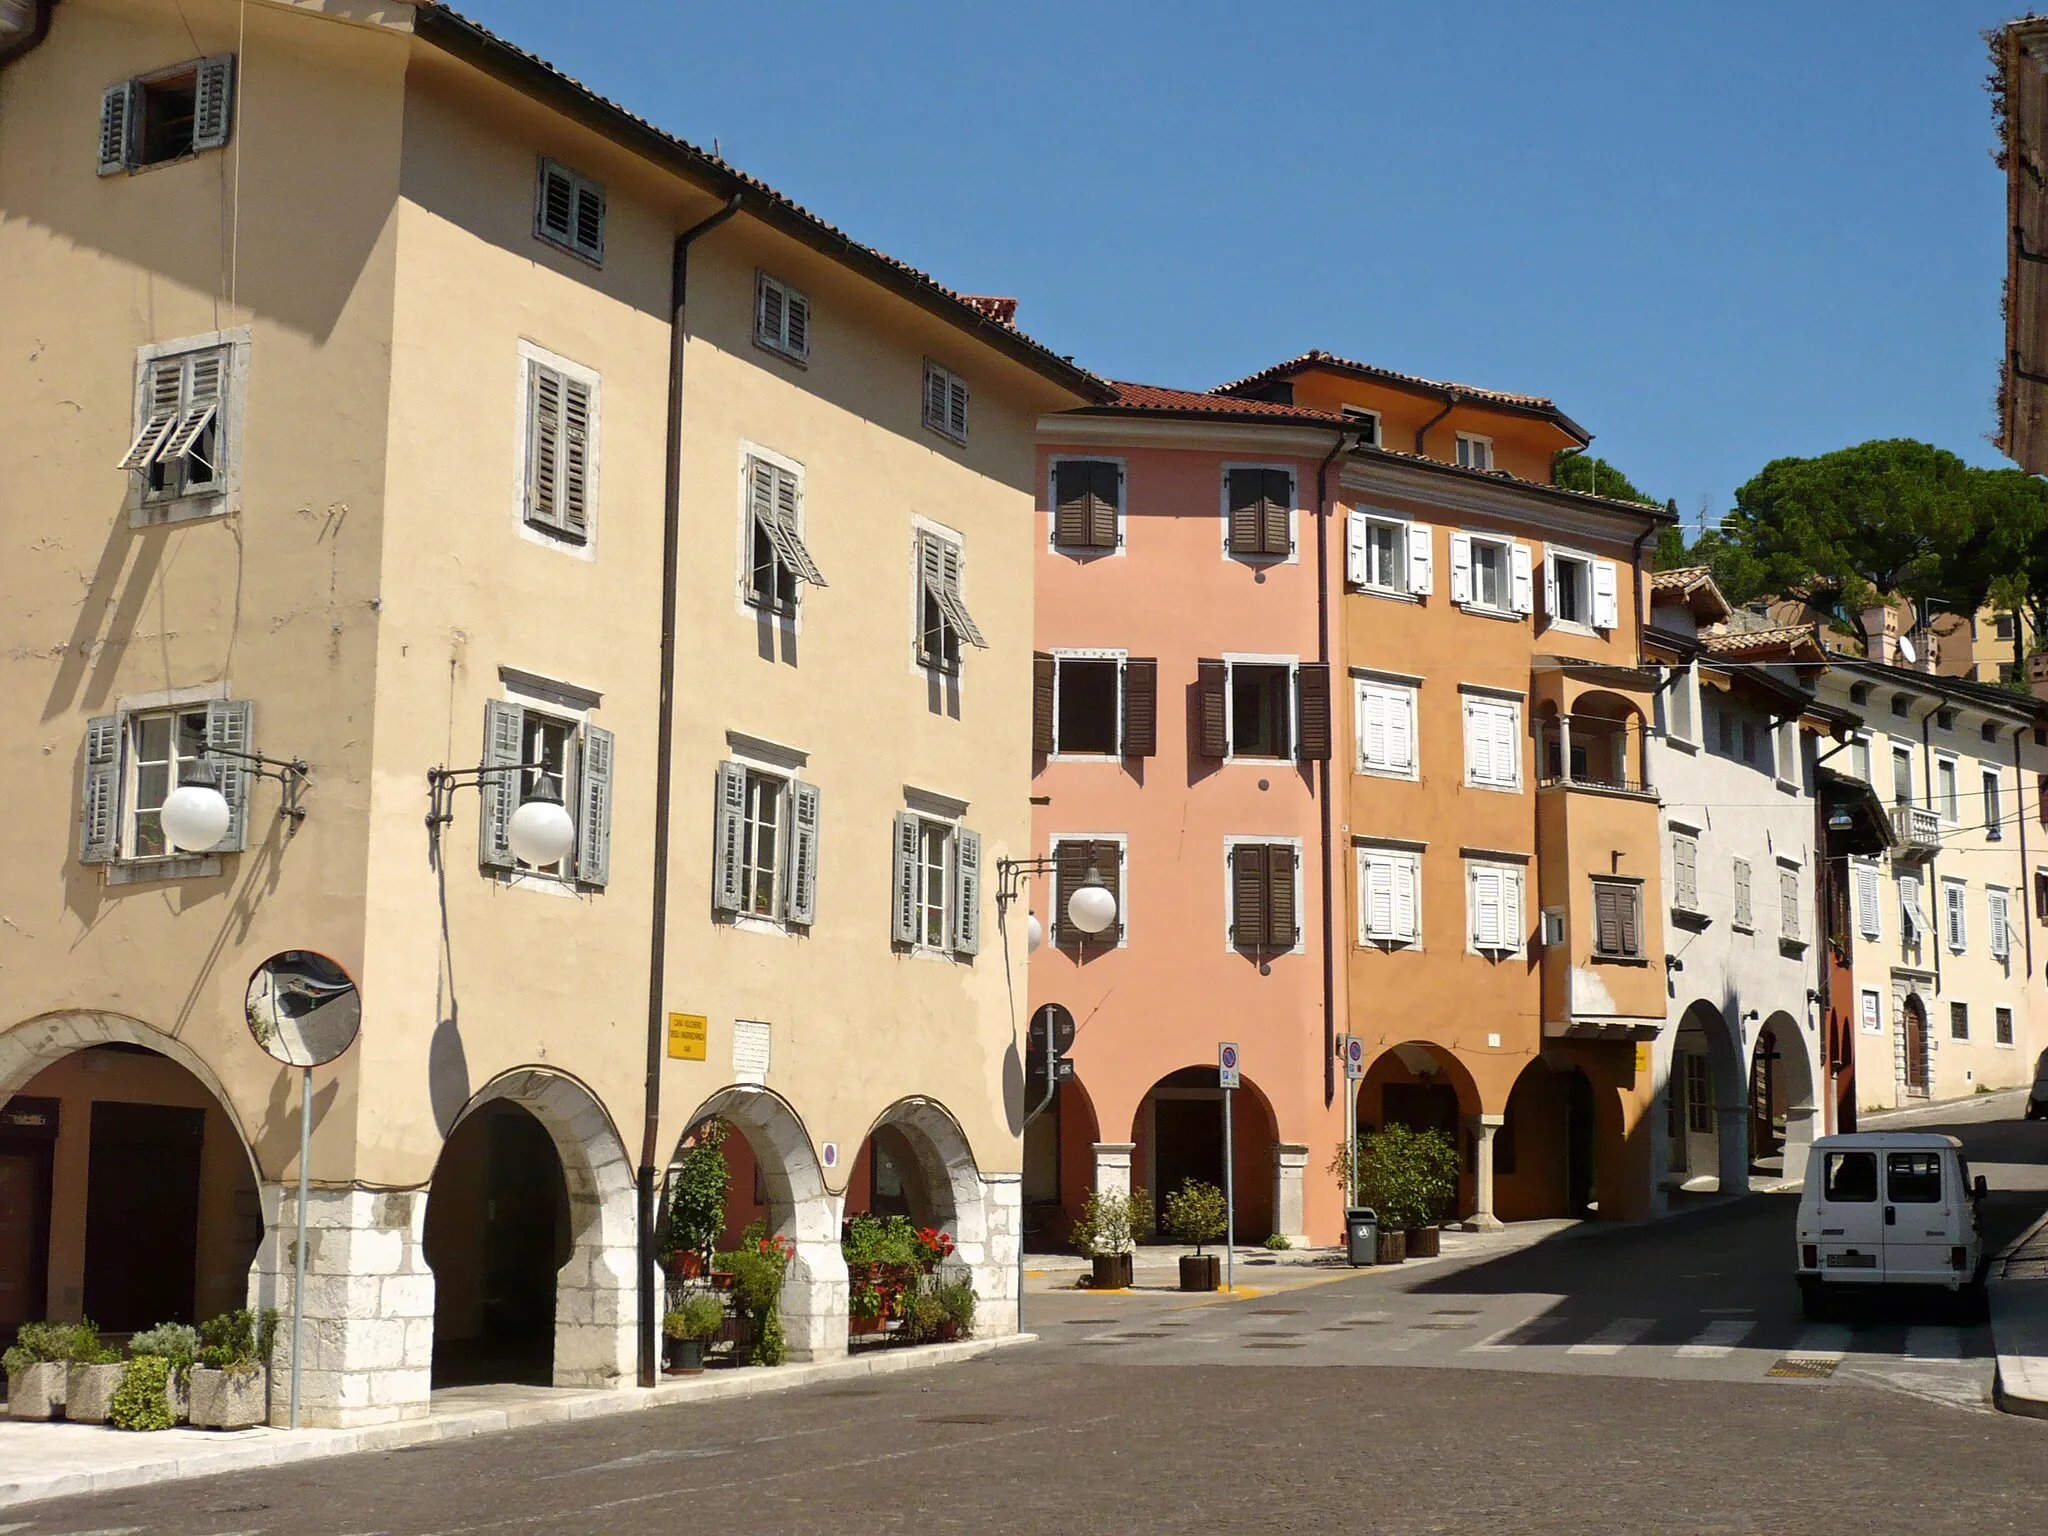 Photo showing: The old part of the town of Gorizia (Slovenian: Gorica) in Friuli Venezia Giulia, Italy.